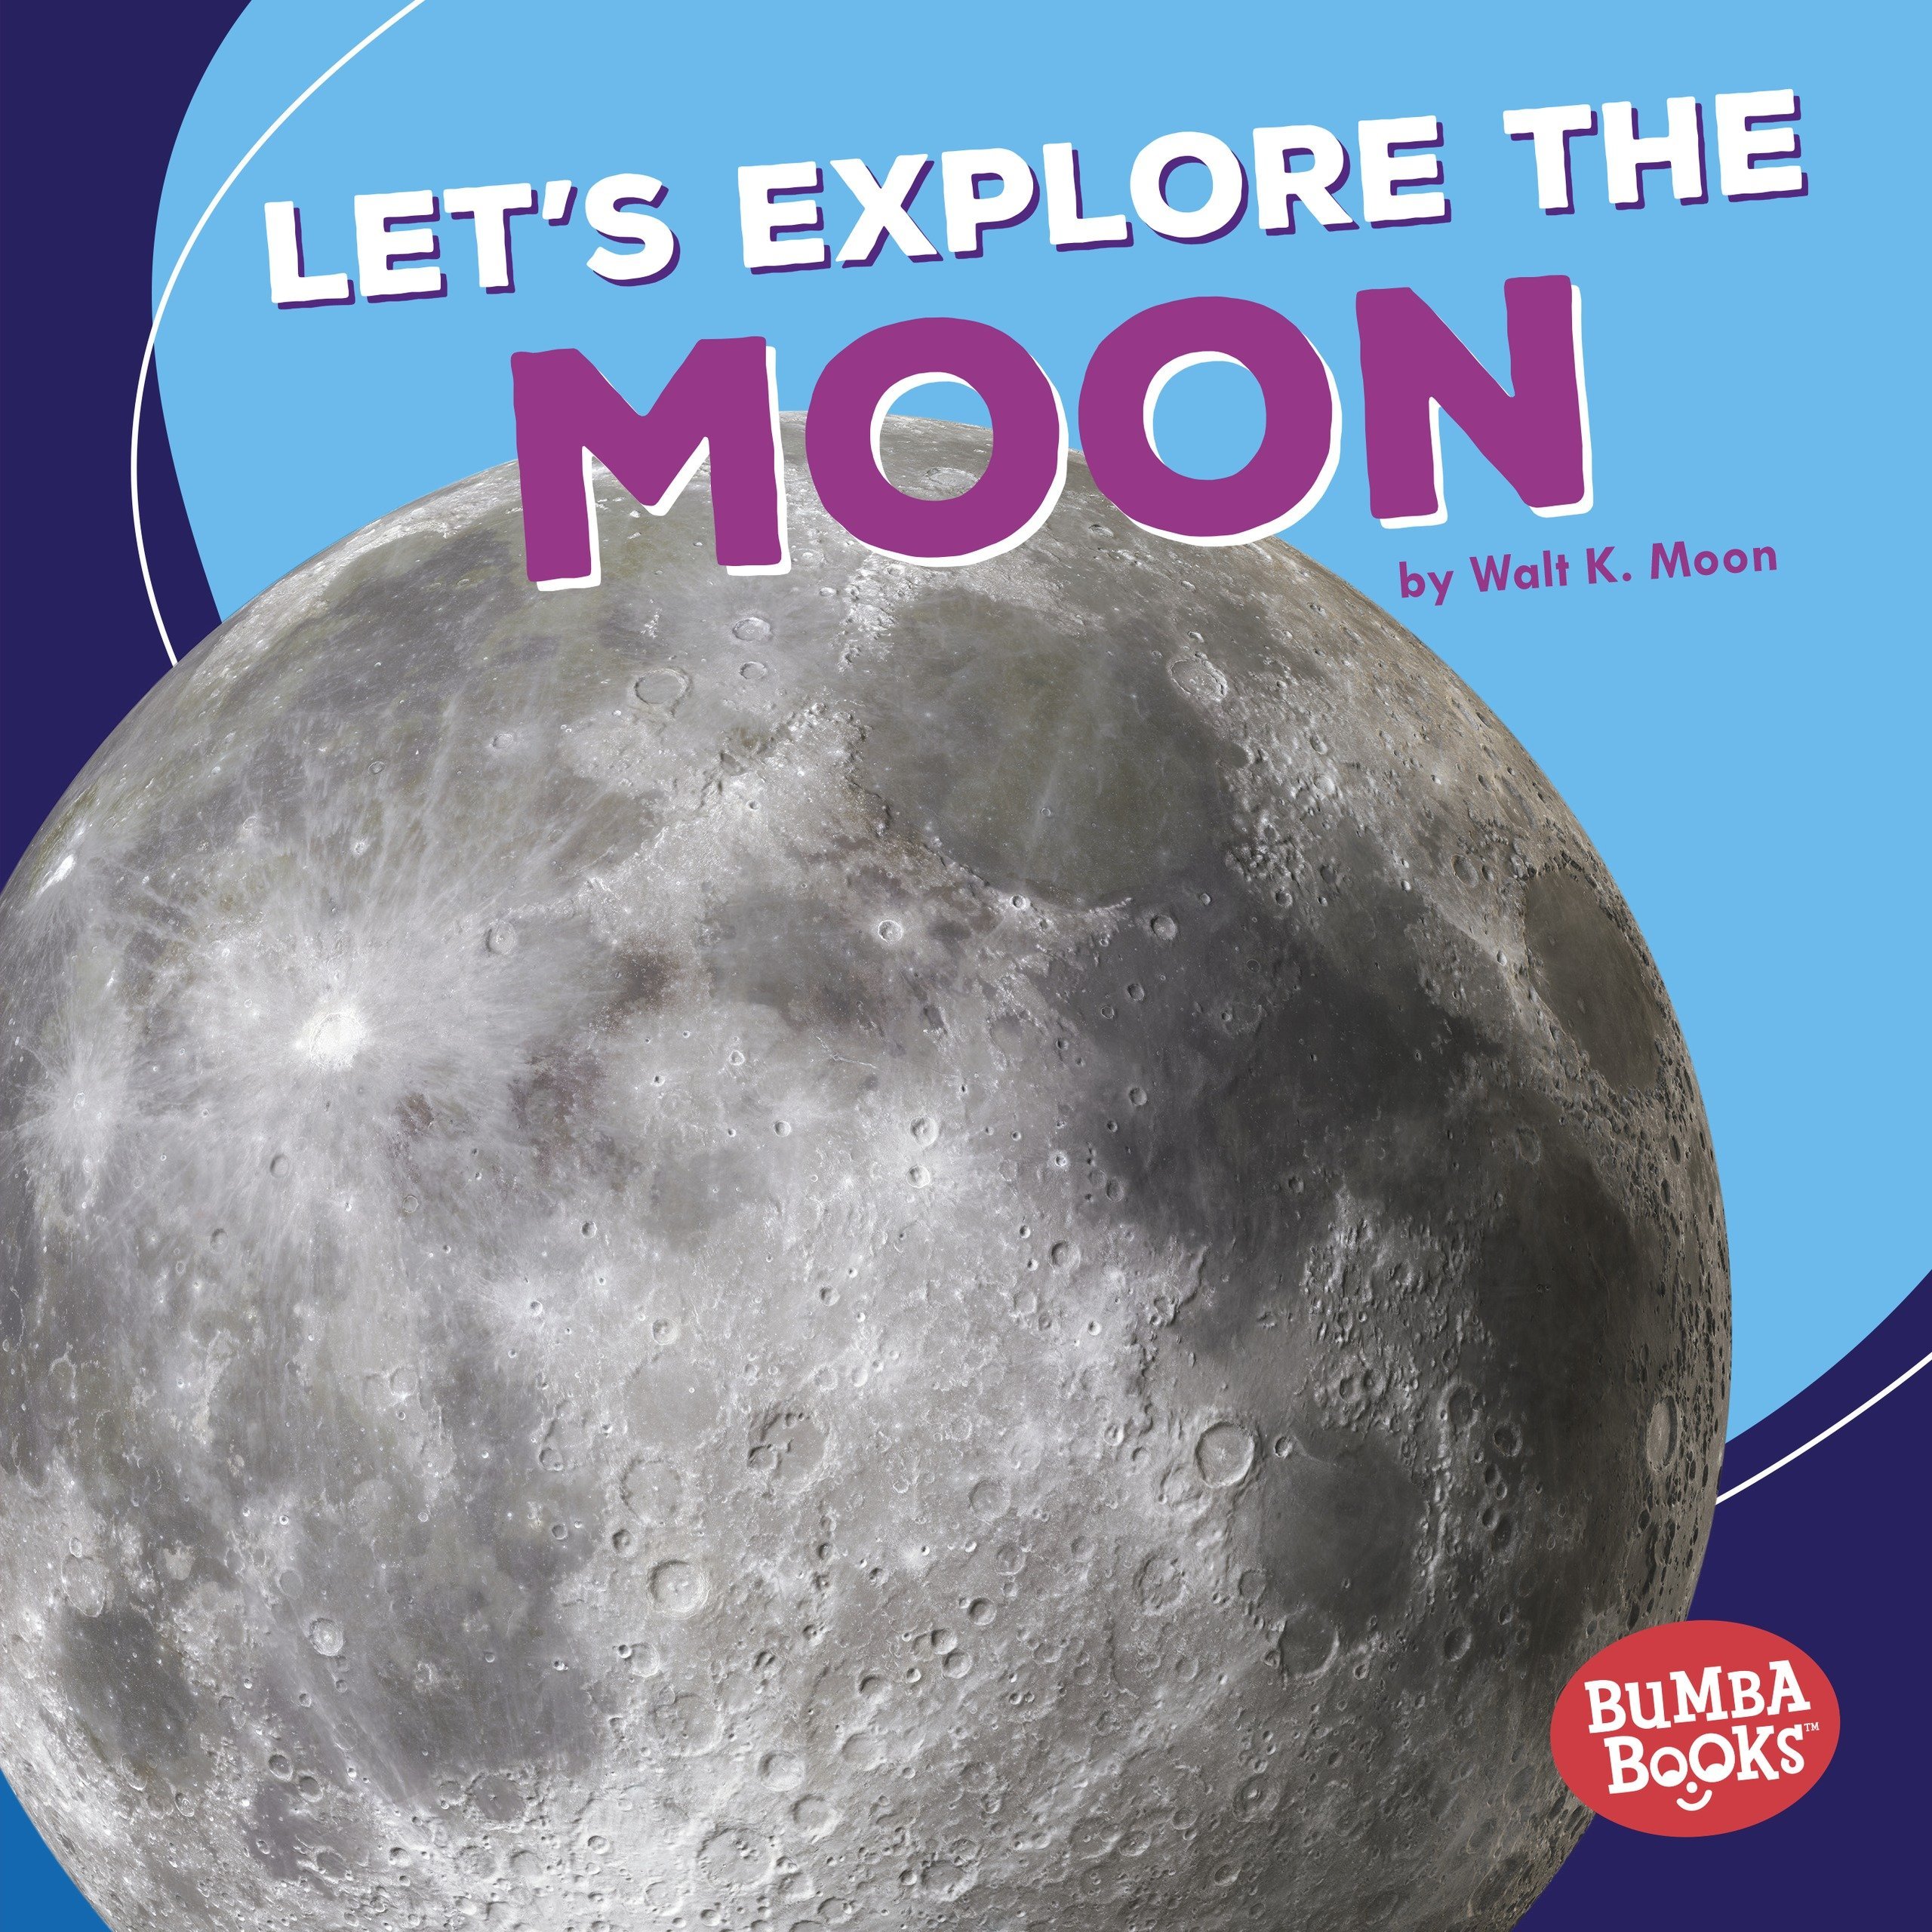 Lets explore. Lunar Moon книга. The Moon - Walter. K to Луна. The Moon книга k tolnoe.